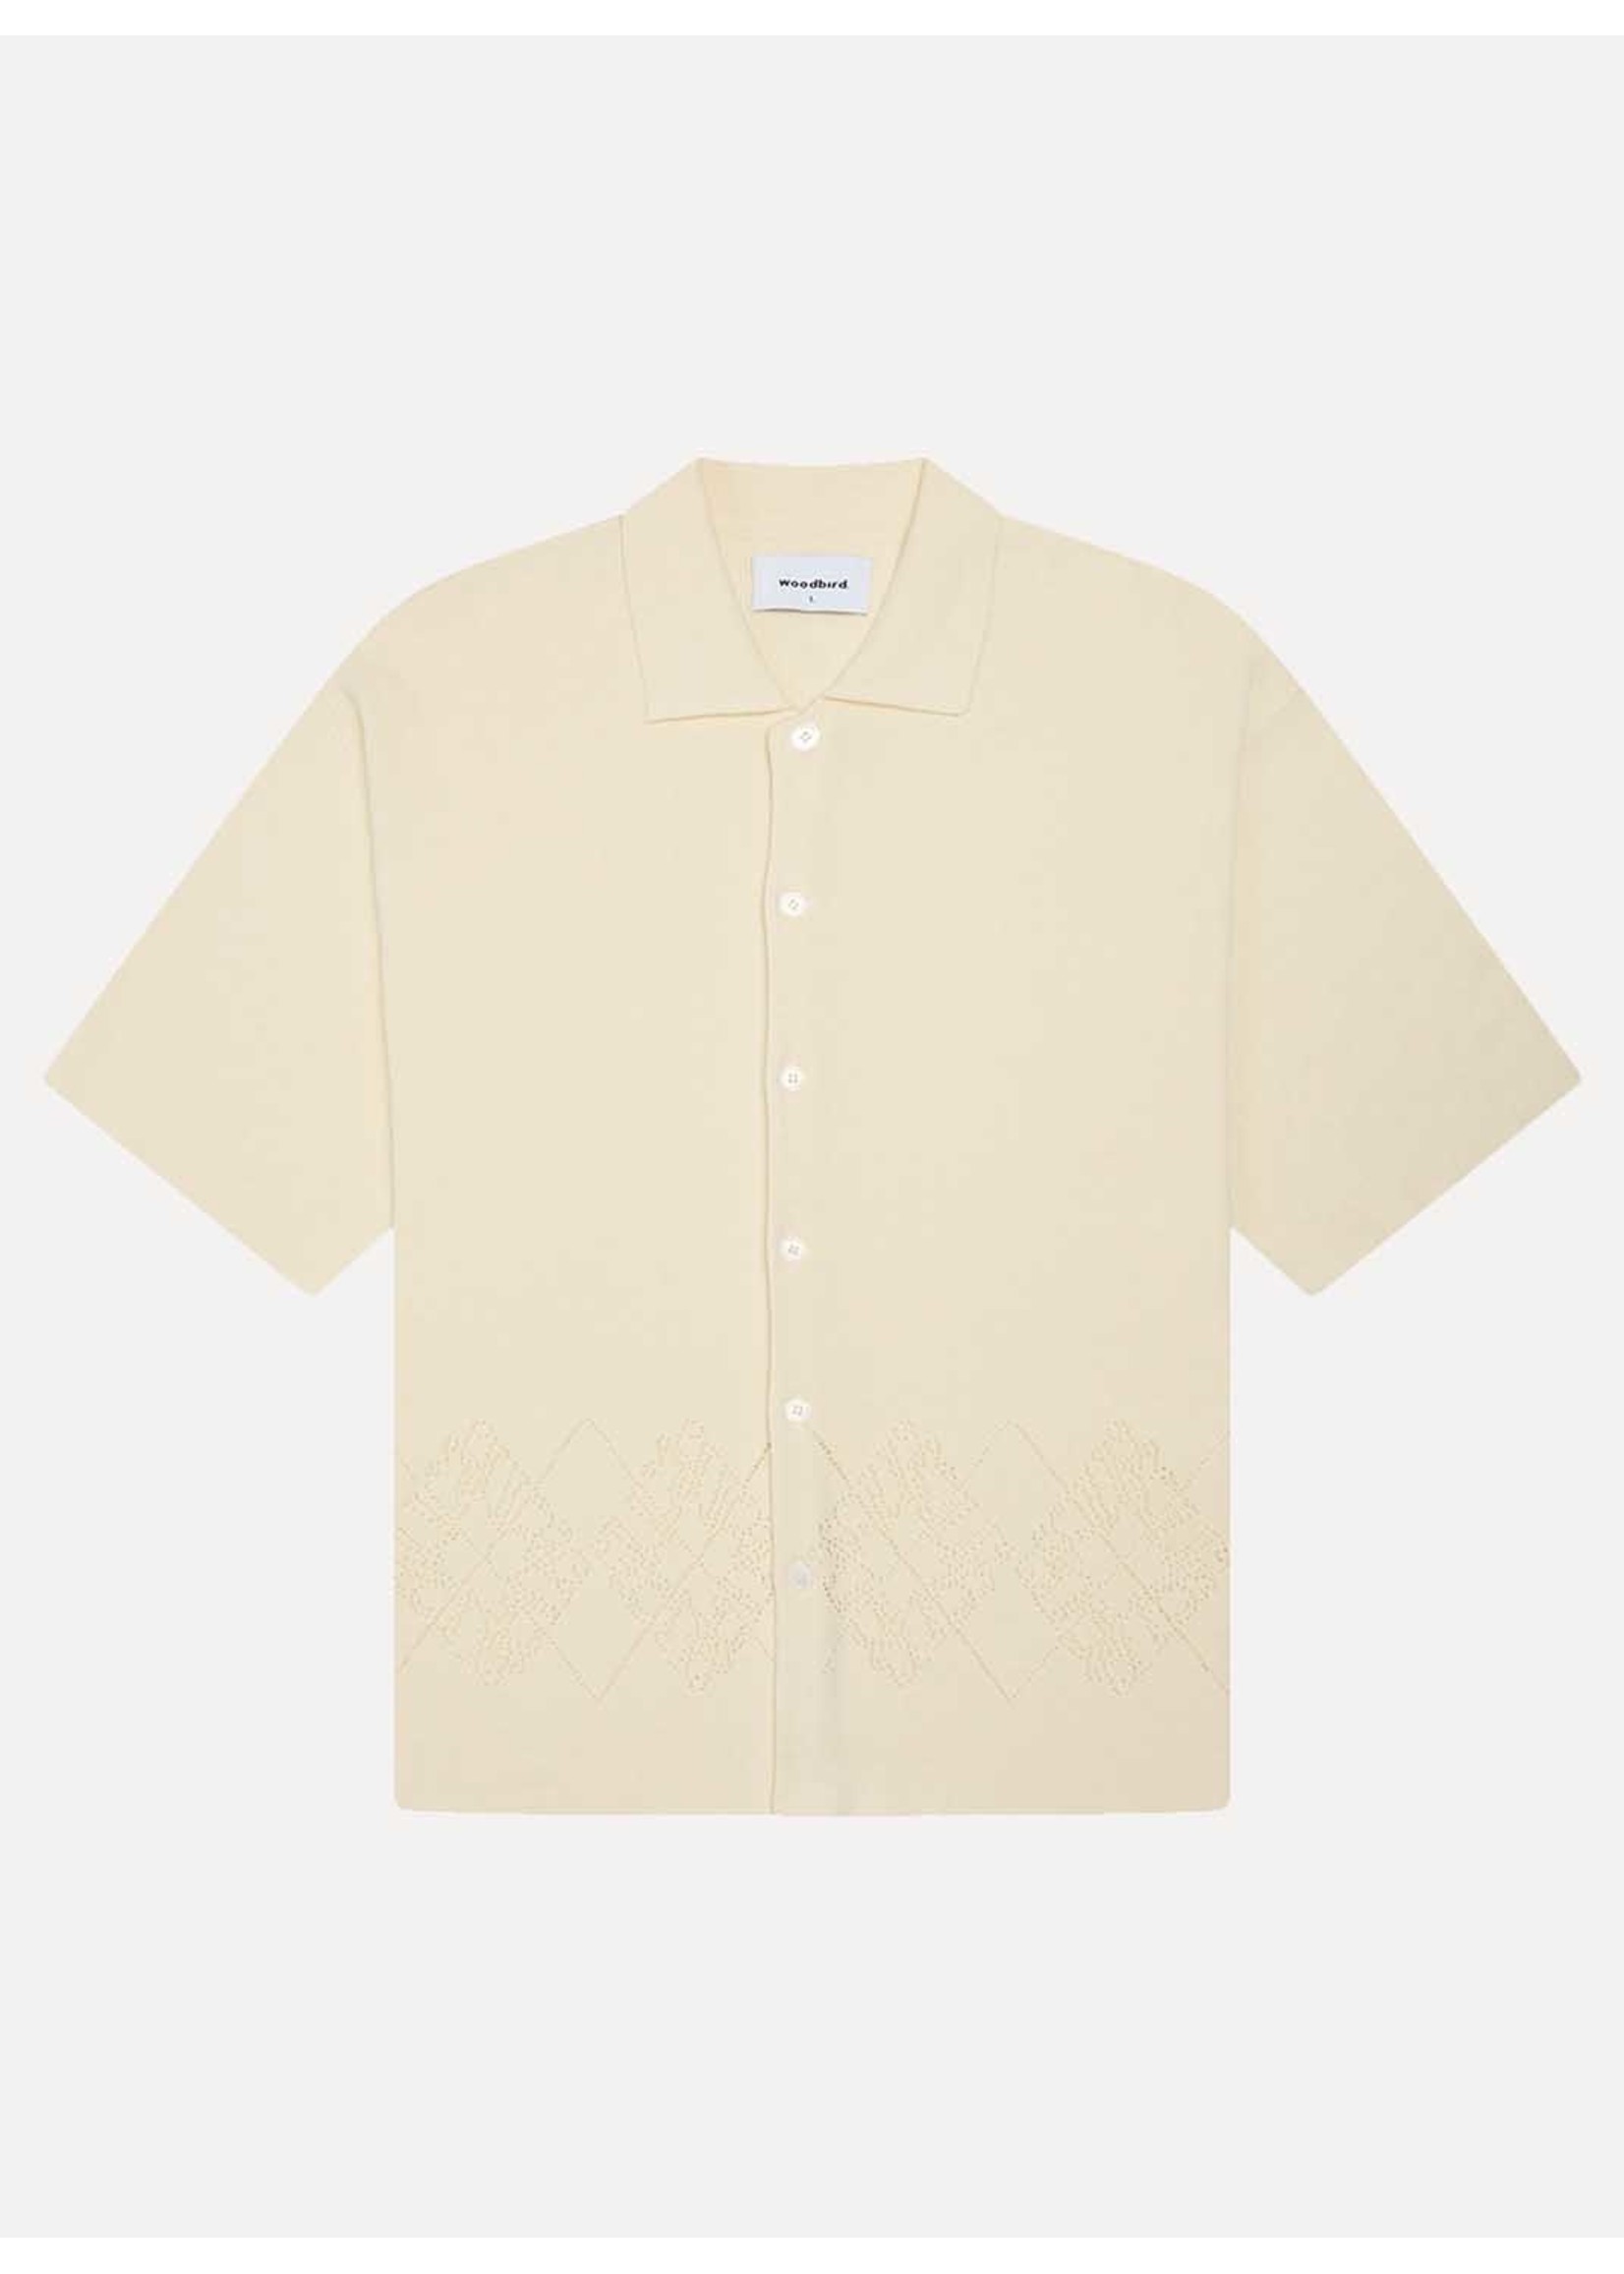 Woodbird Banks Knit Shirt Off White 2326-709